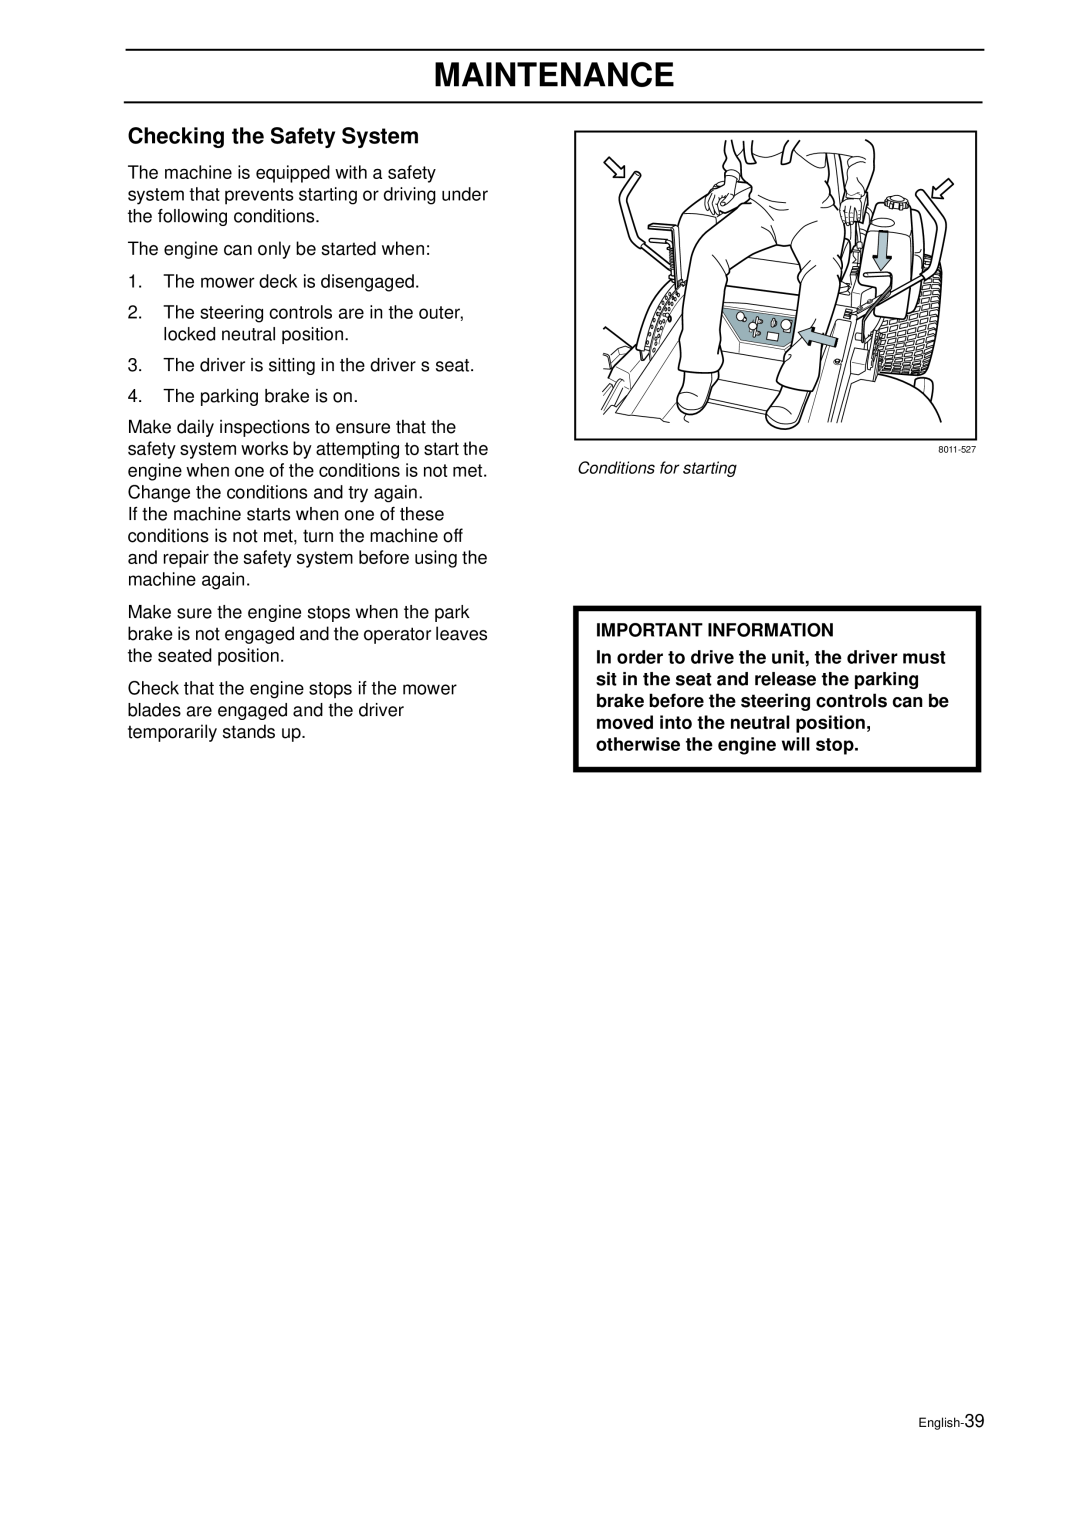 Husqvarna IZ 21 manual Checking the Safety System, Maintenance, Important Information 